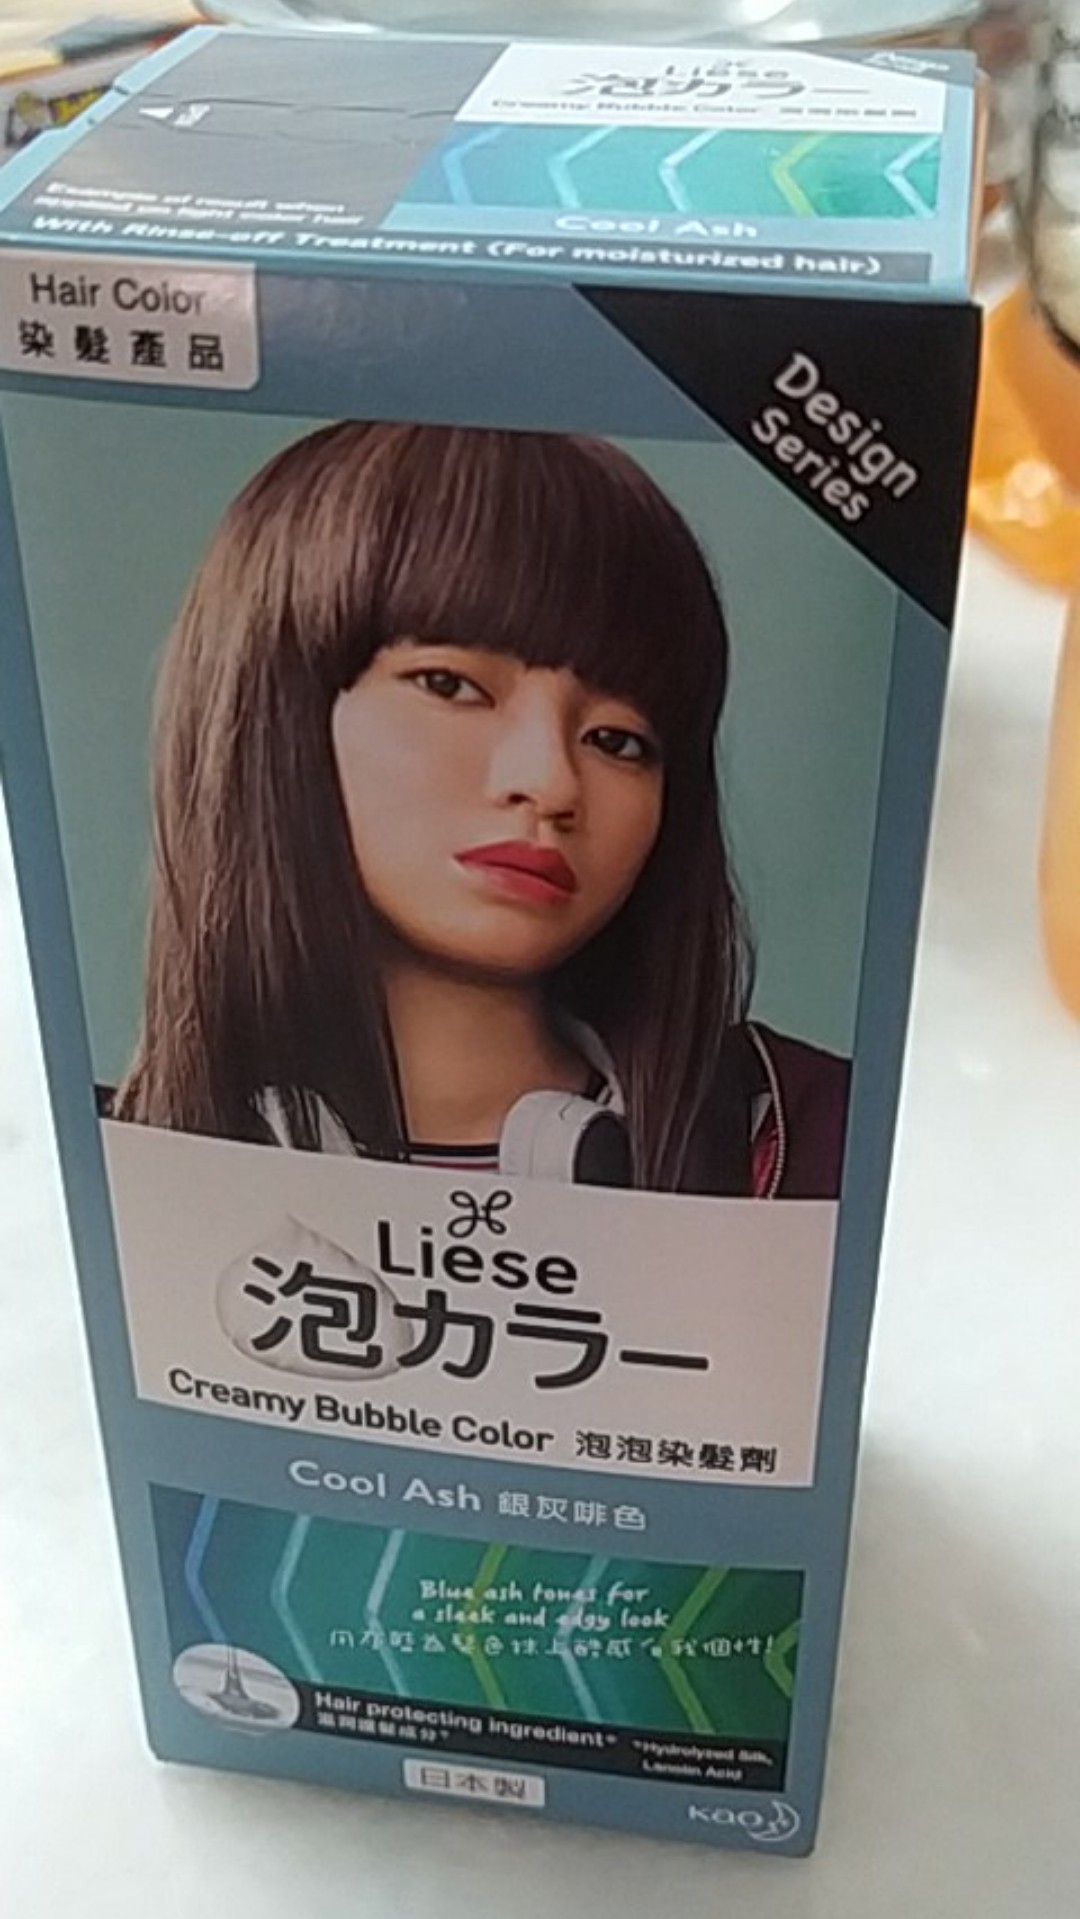  Liese  Creamy Bubble Hair  Color   New Two Tones color  